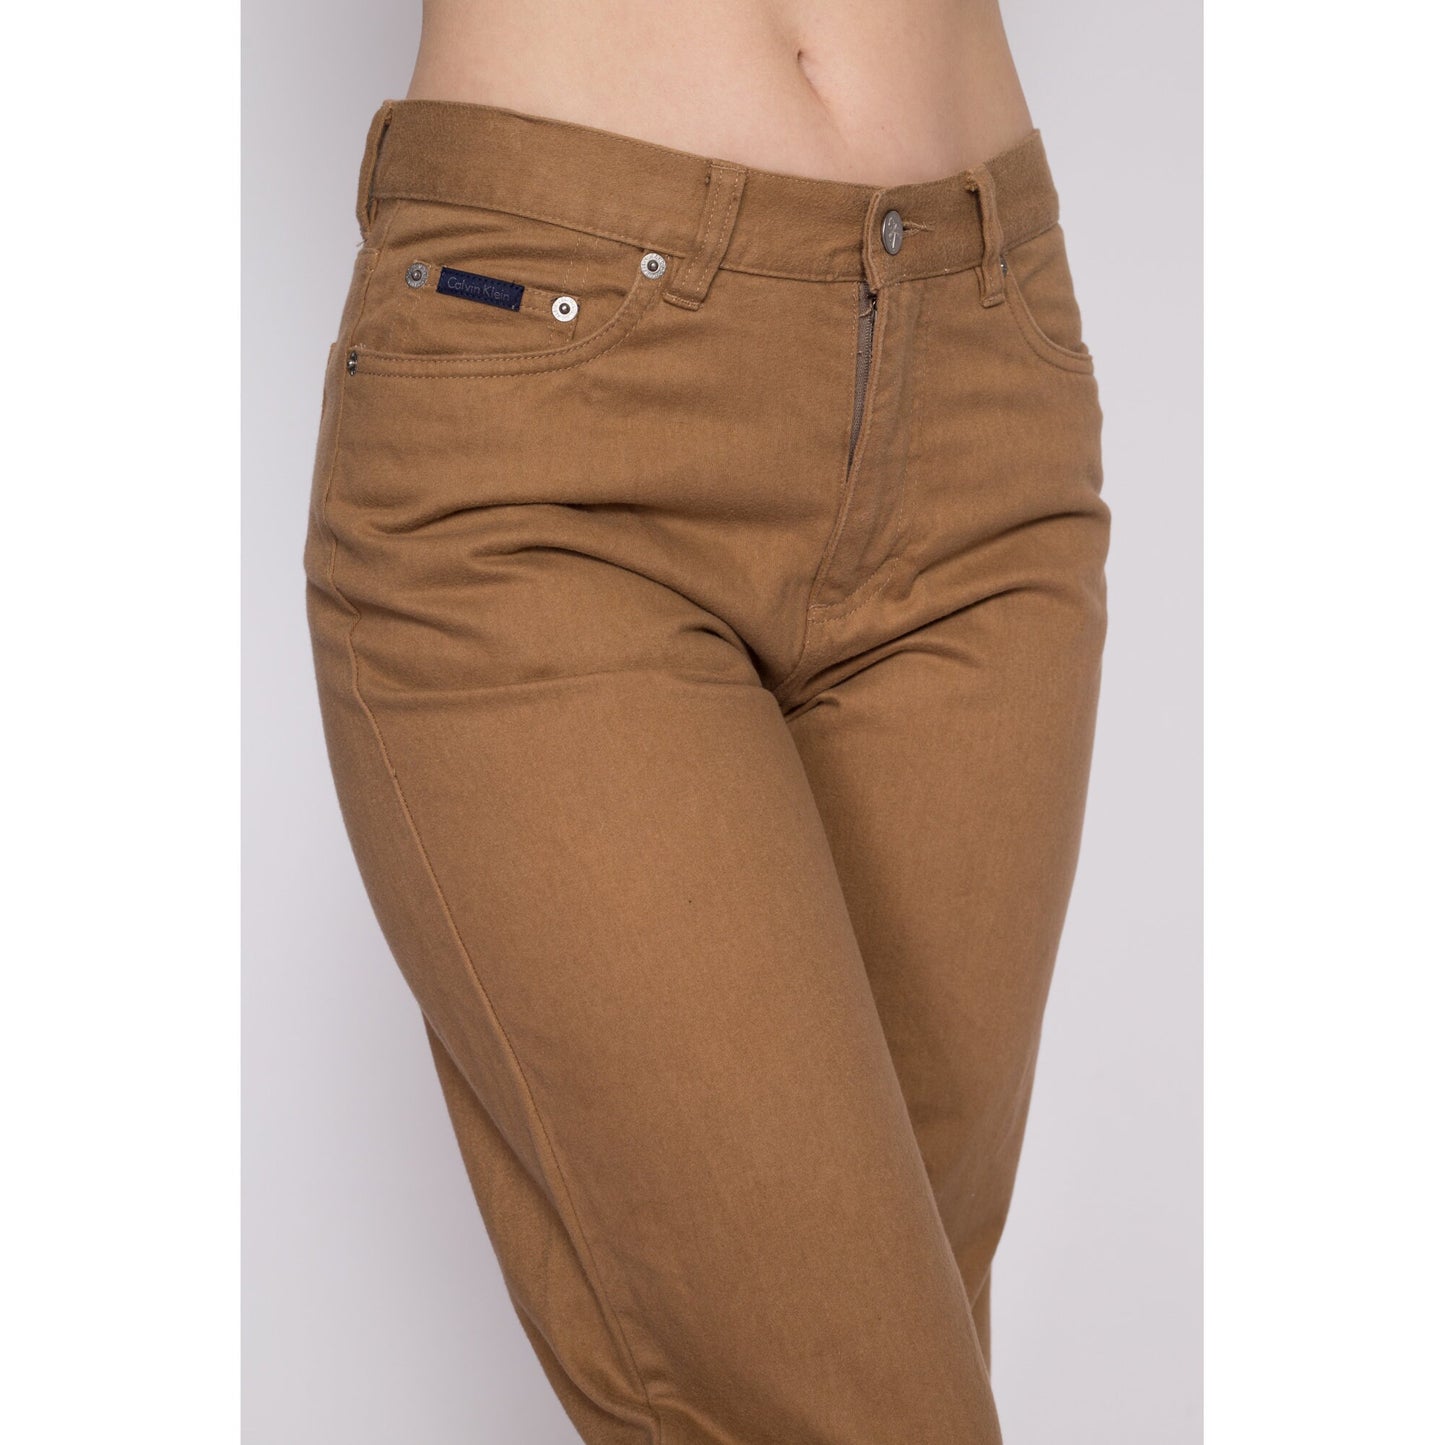 M| 90s Calvin Klein Brown Mid Rise Pants - Medium | Vintage Soft Cotton Straight Leg Trousers